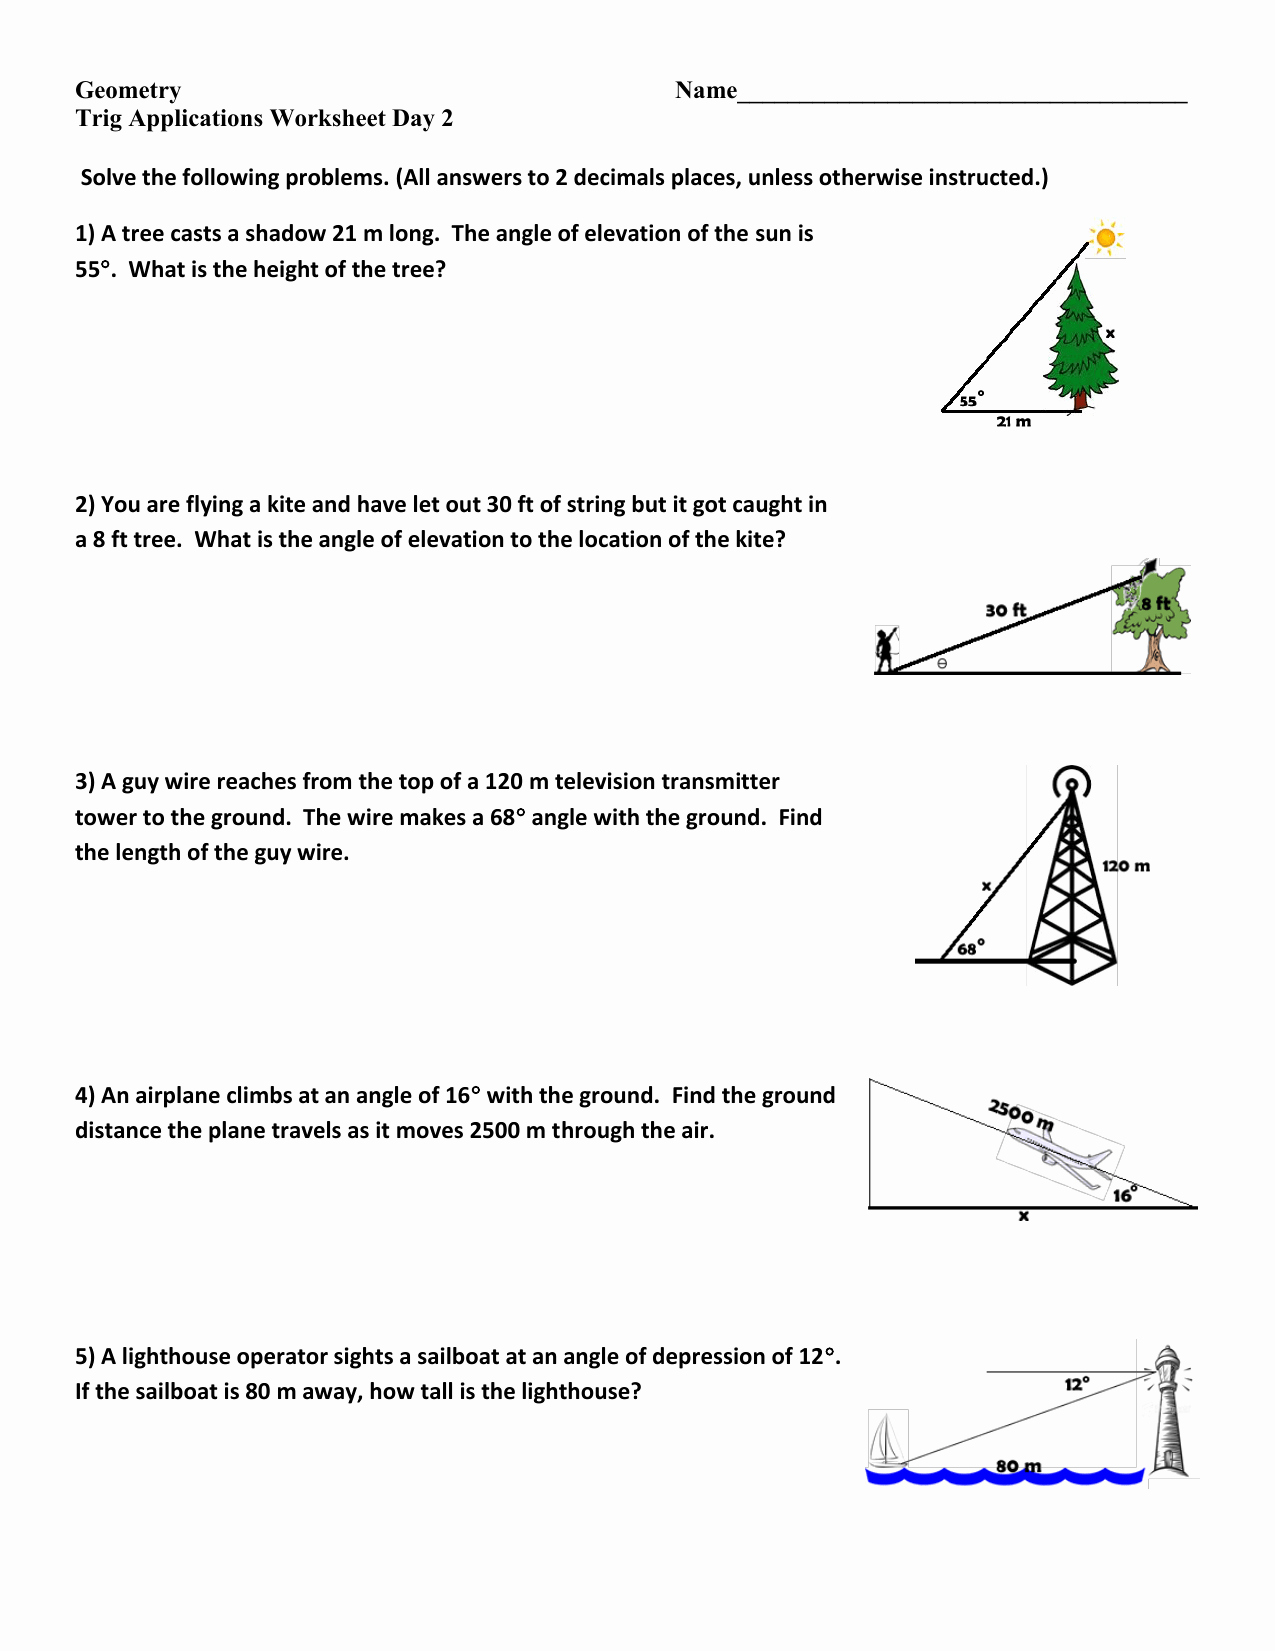 Trigonometry Word Problems Worksheet Answers Best Of Trigonometry Ratios Worksheet Answers